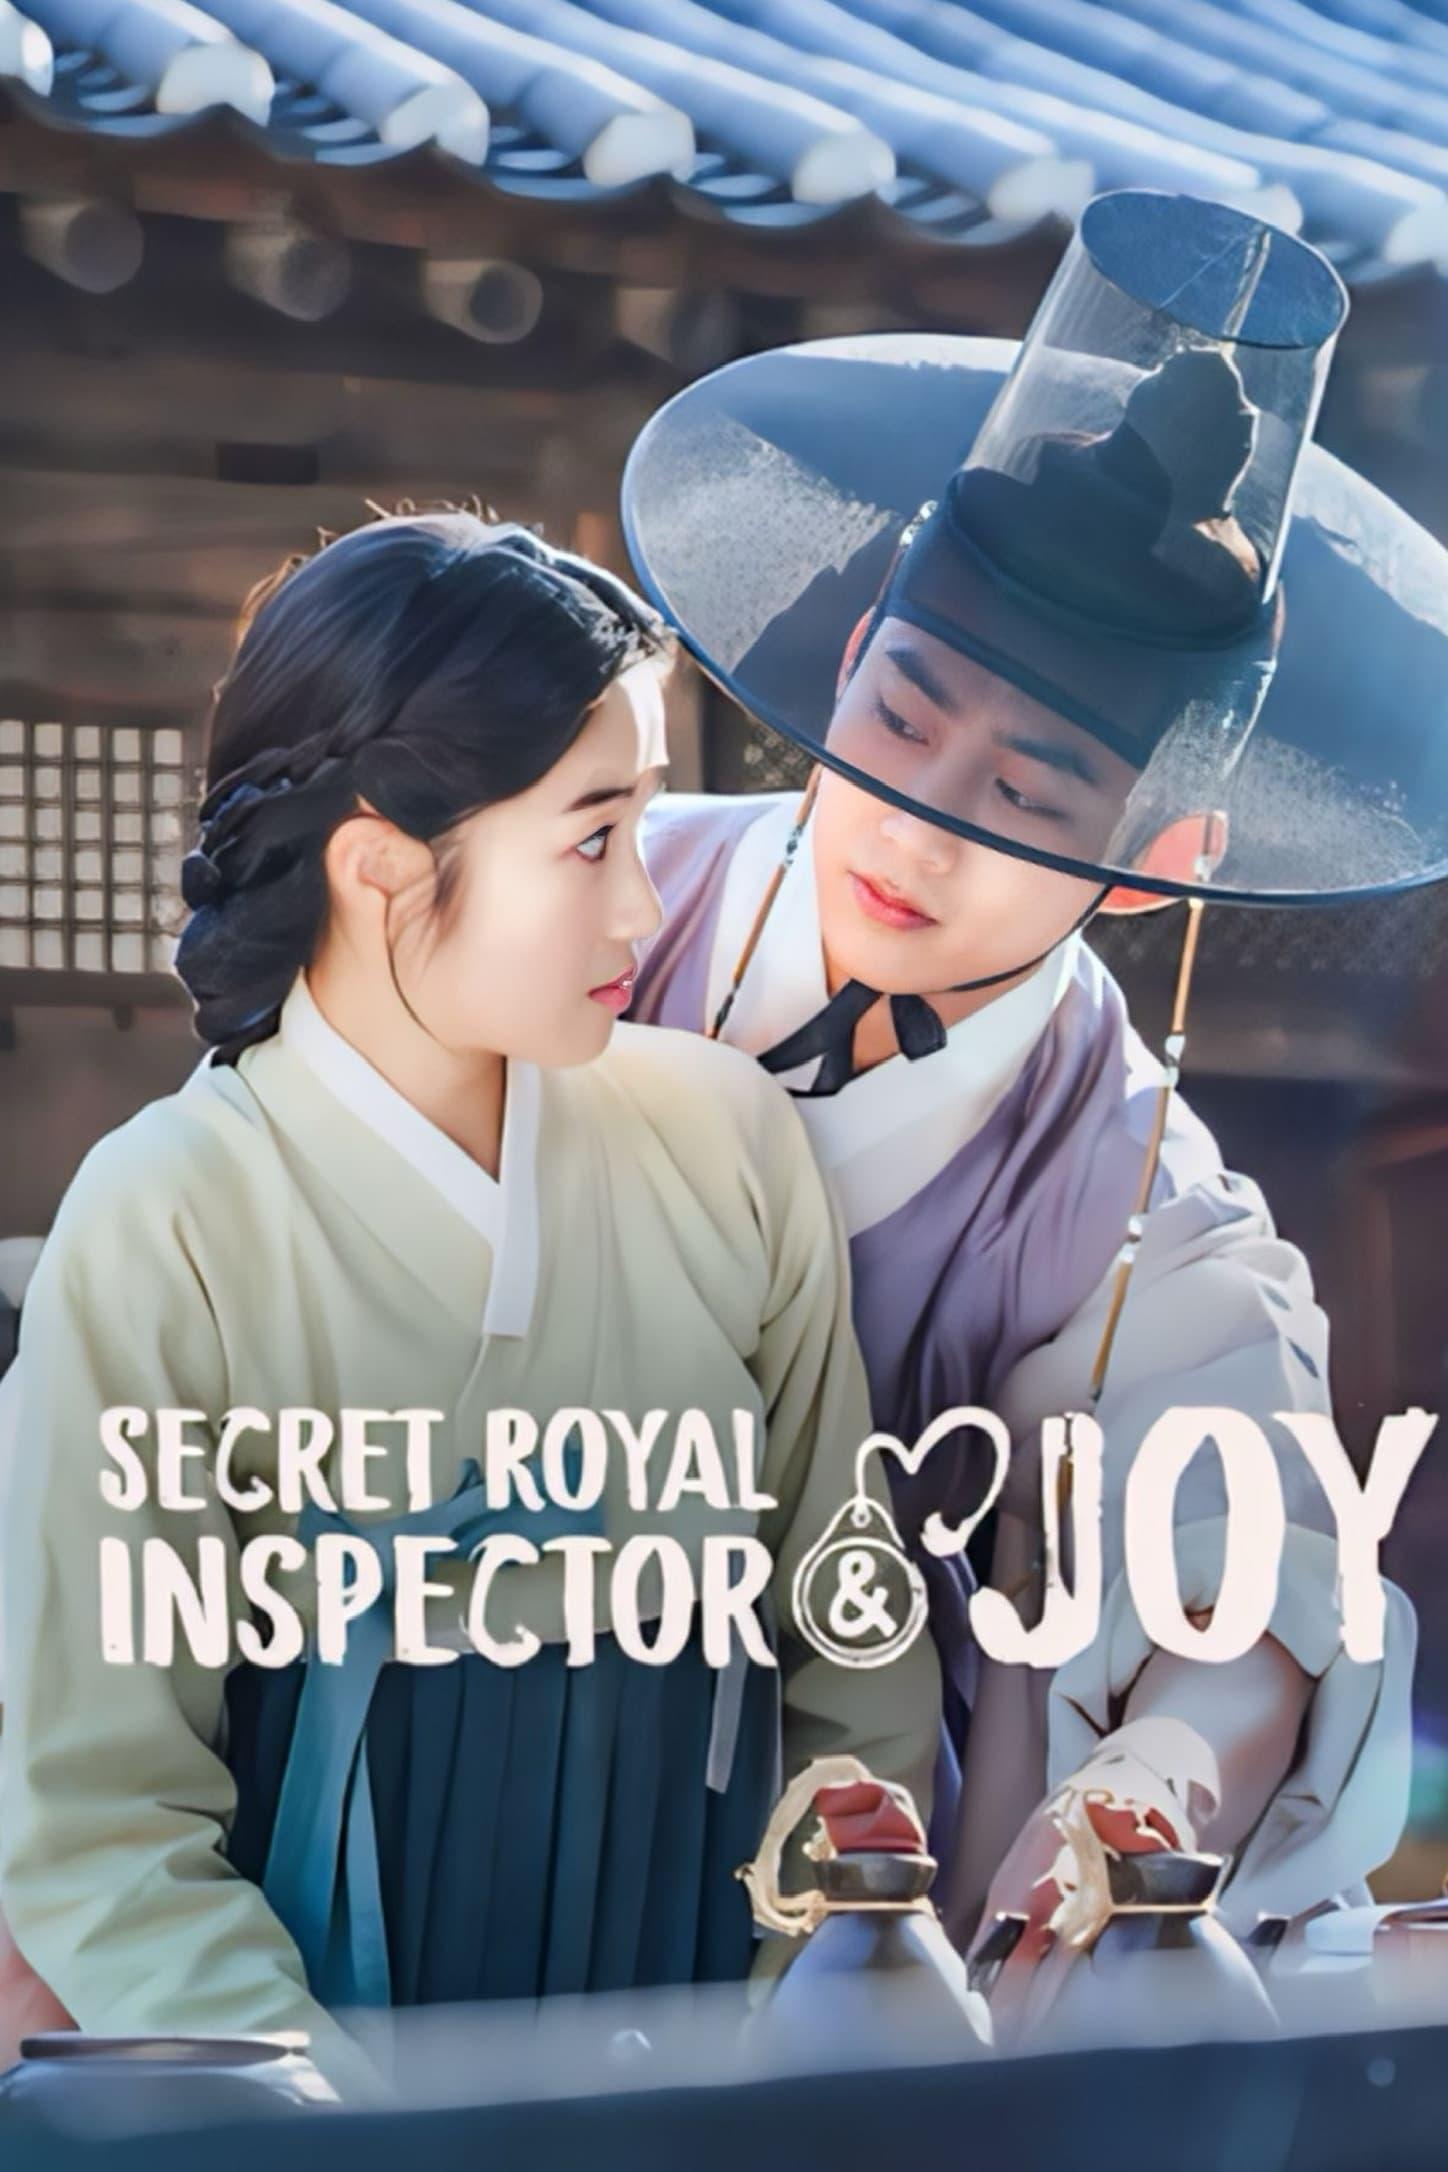 Secret Royal Inspector & Joy poster